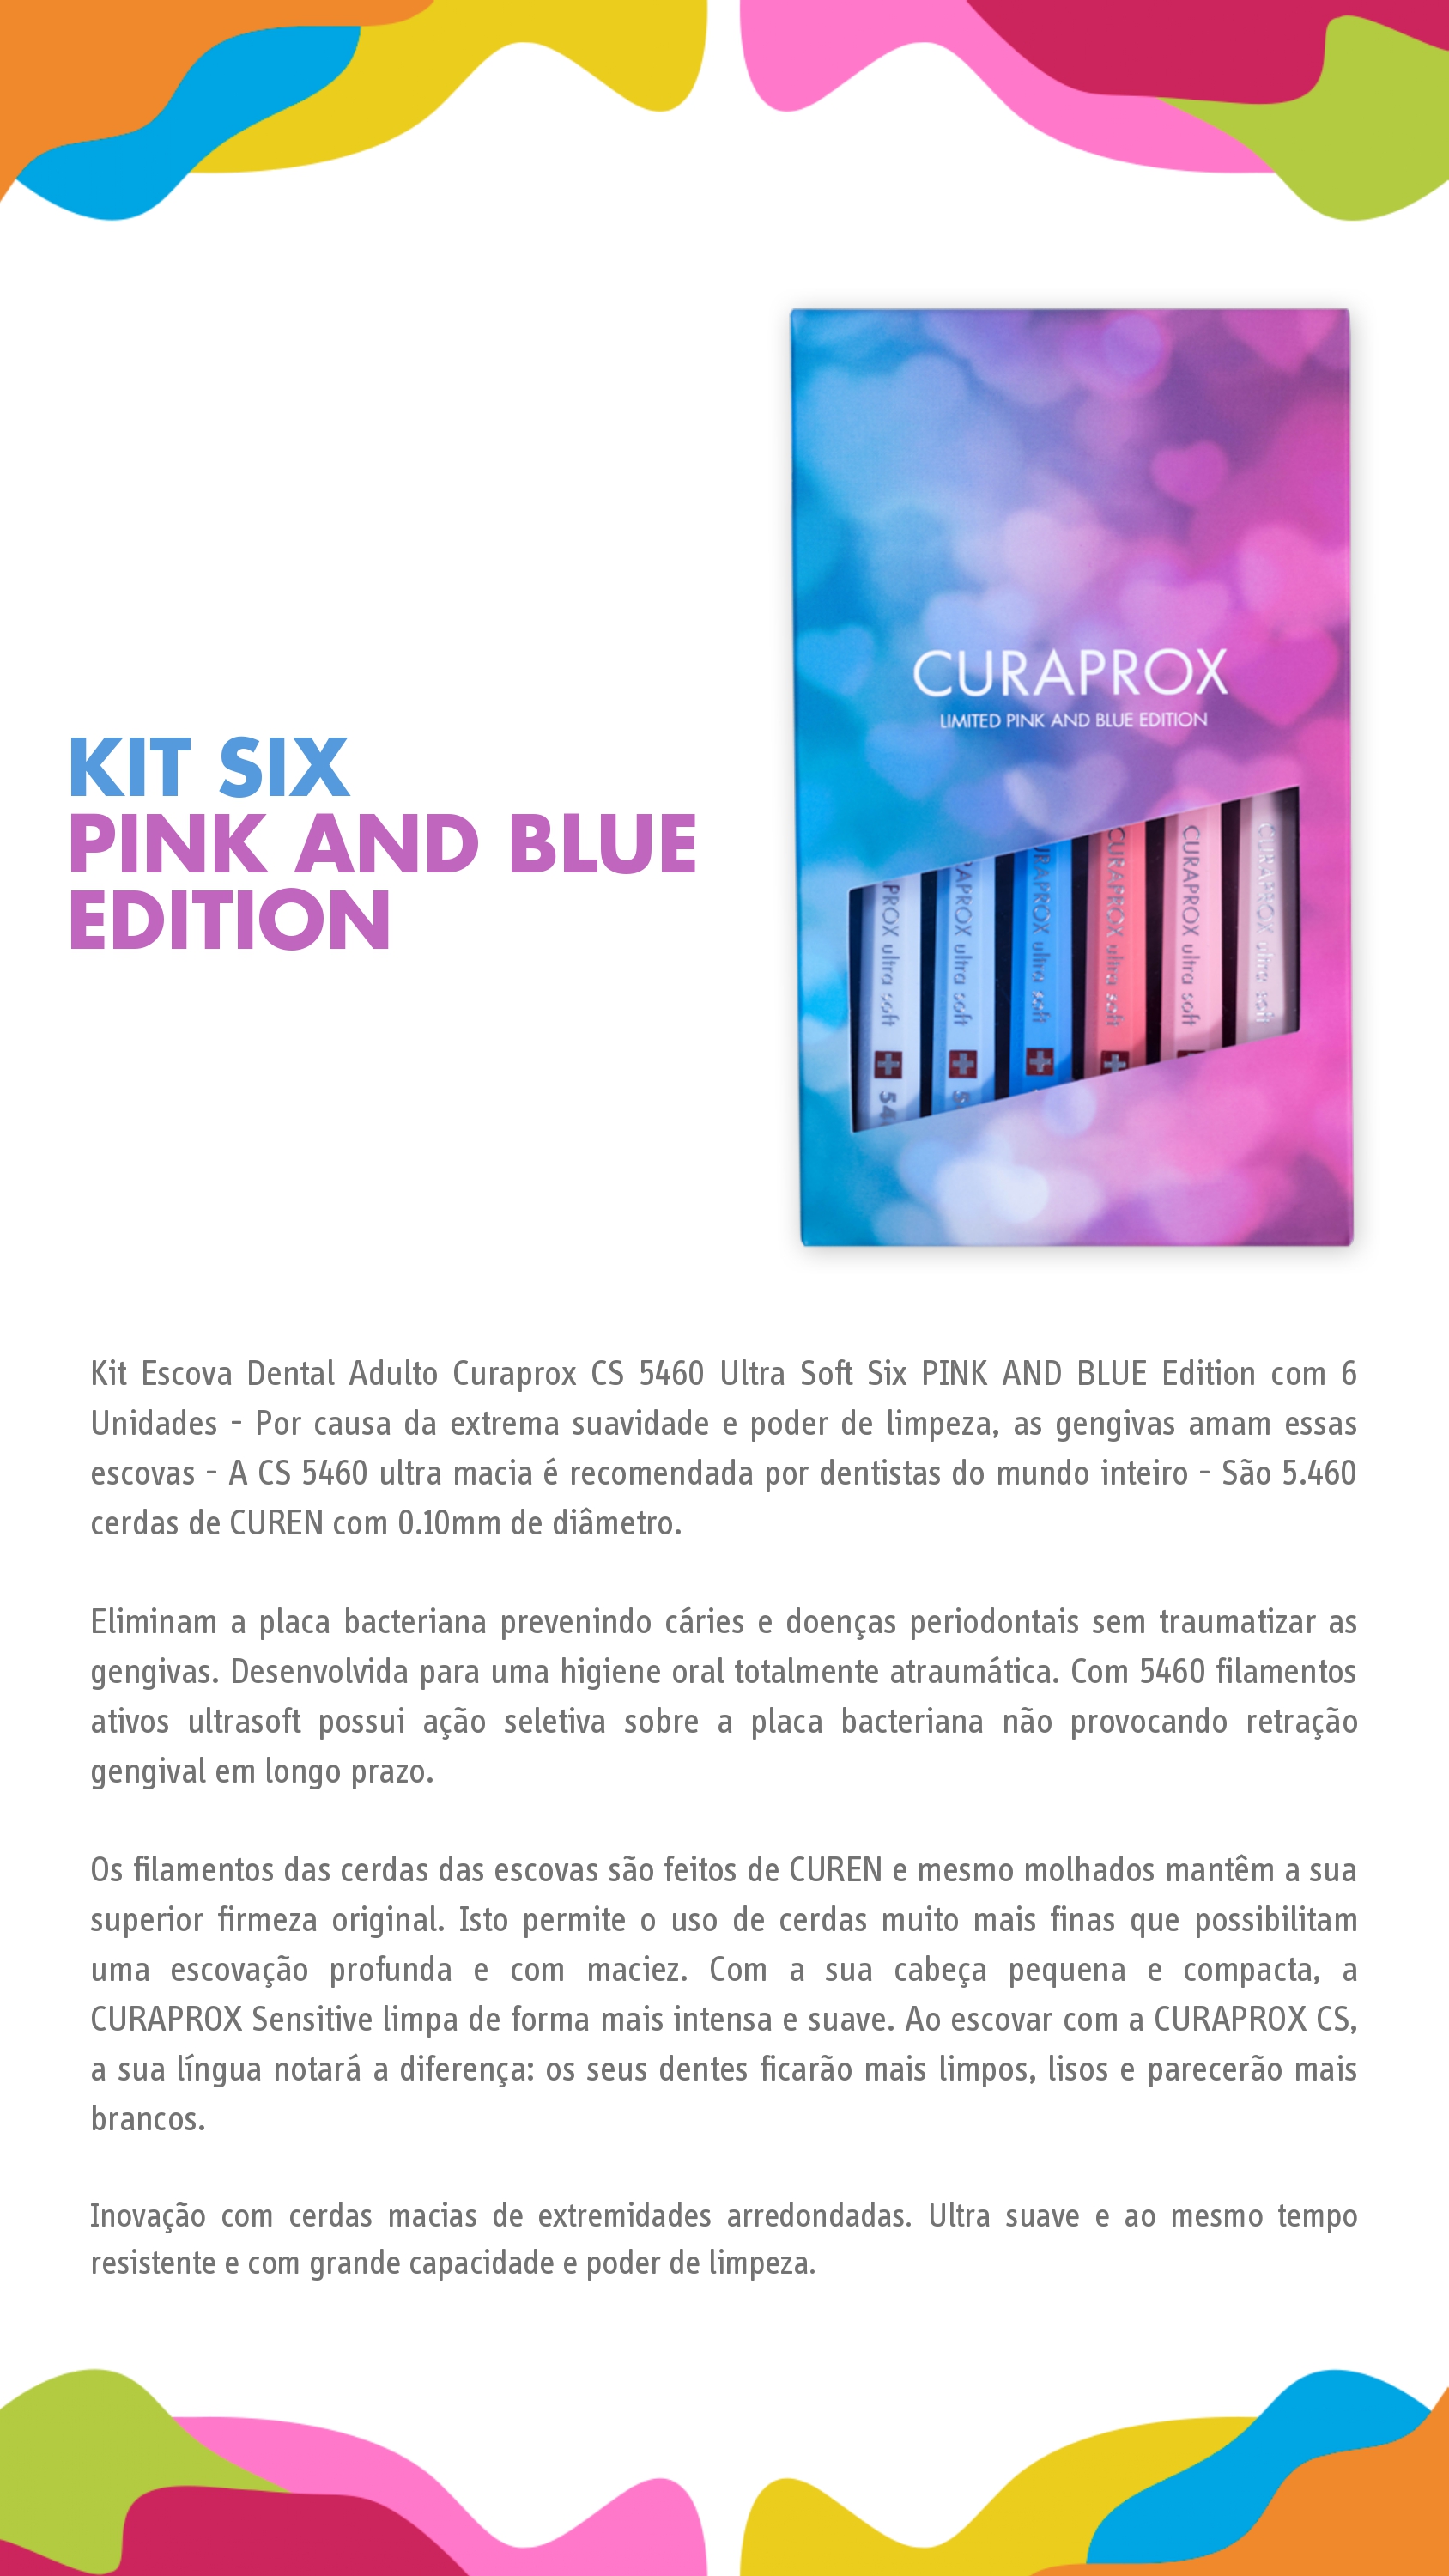 kit pinkblue edition